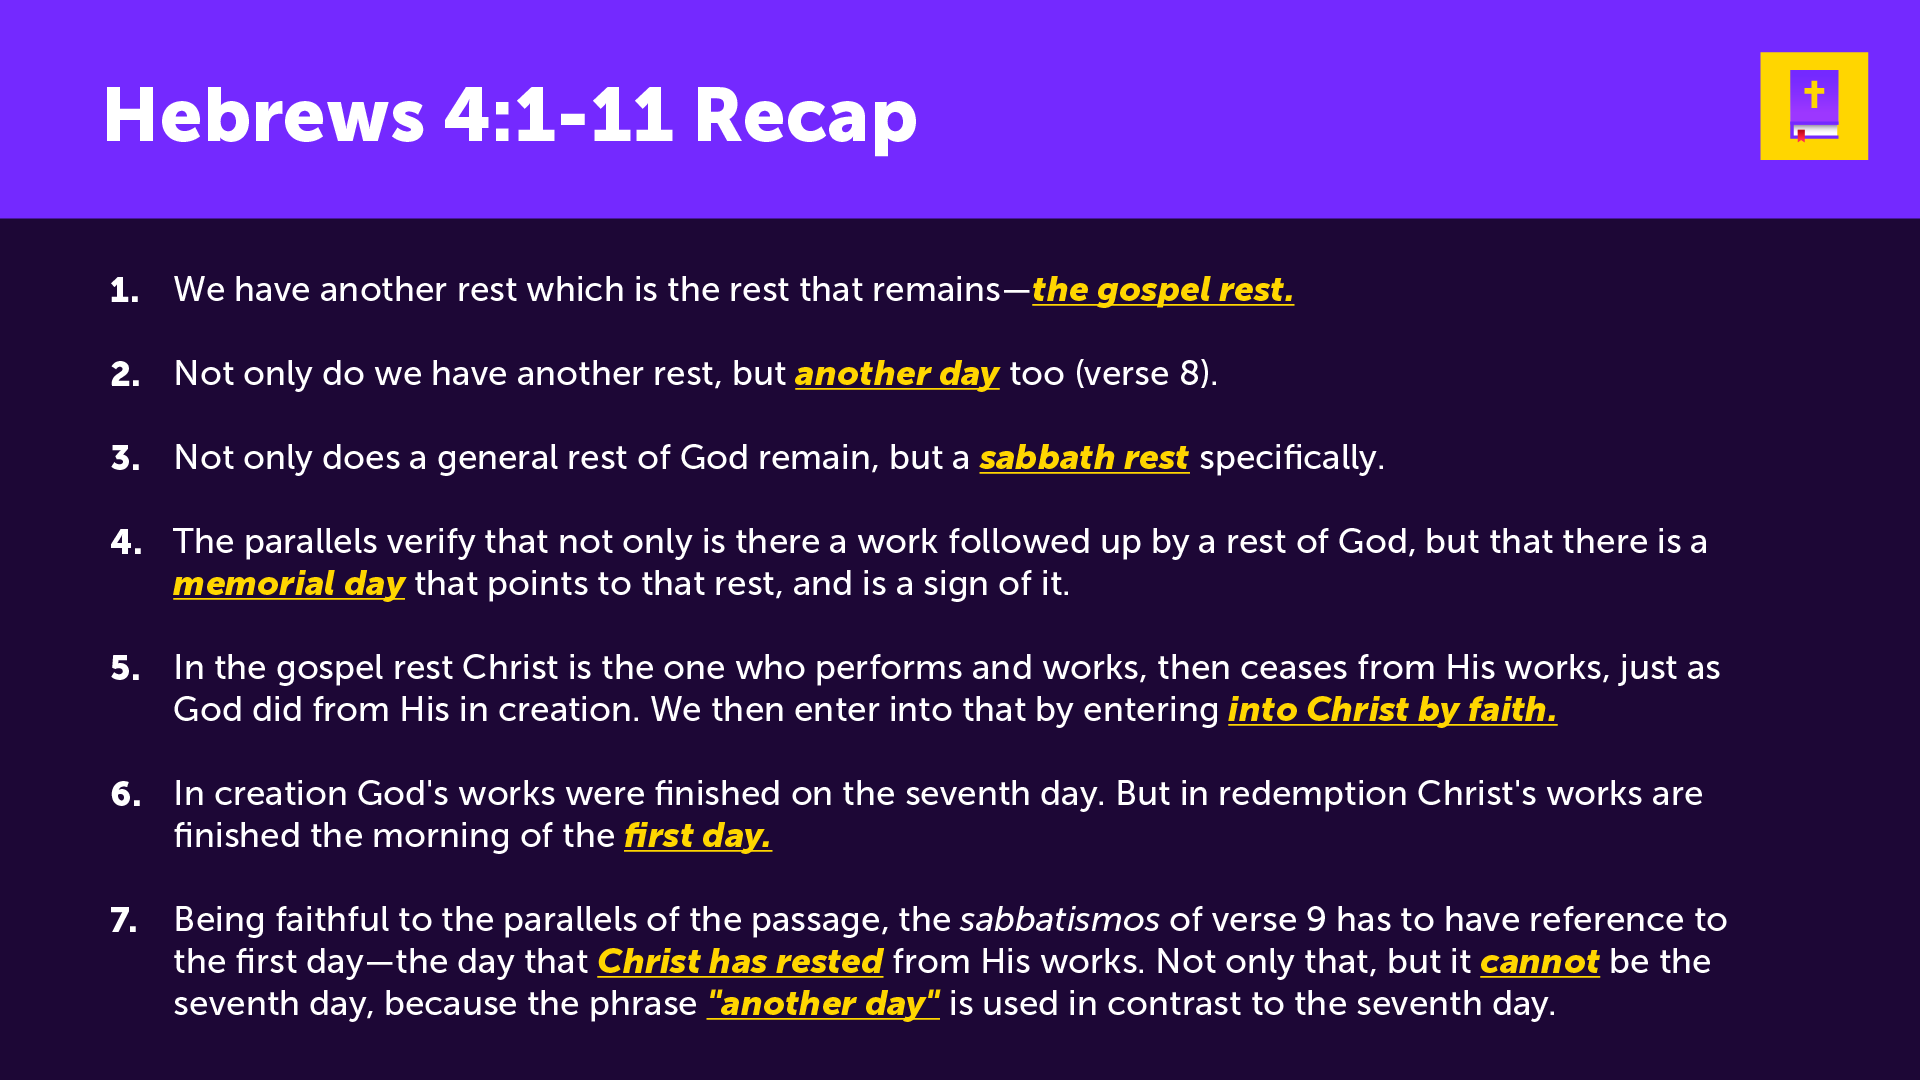 An exegetical recap of Hebrews 4:1-11.